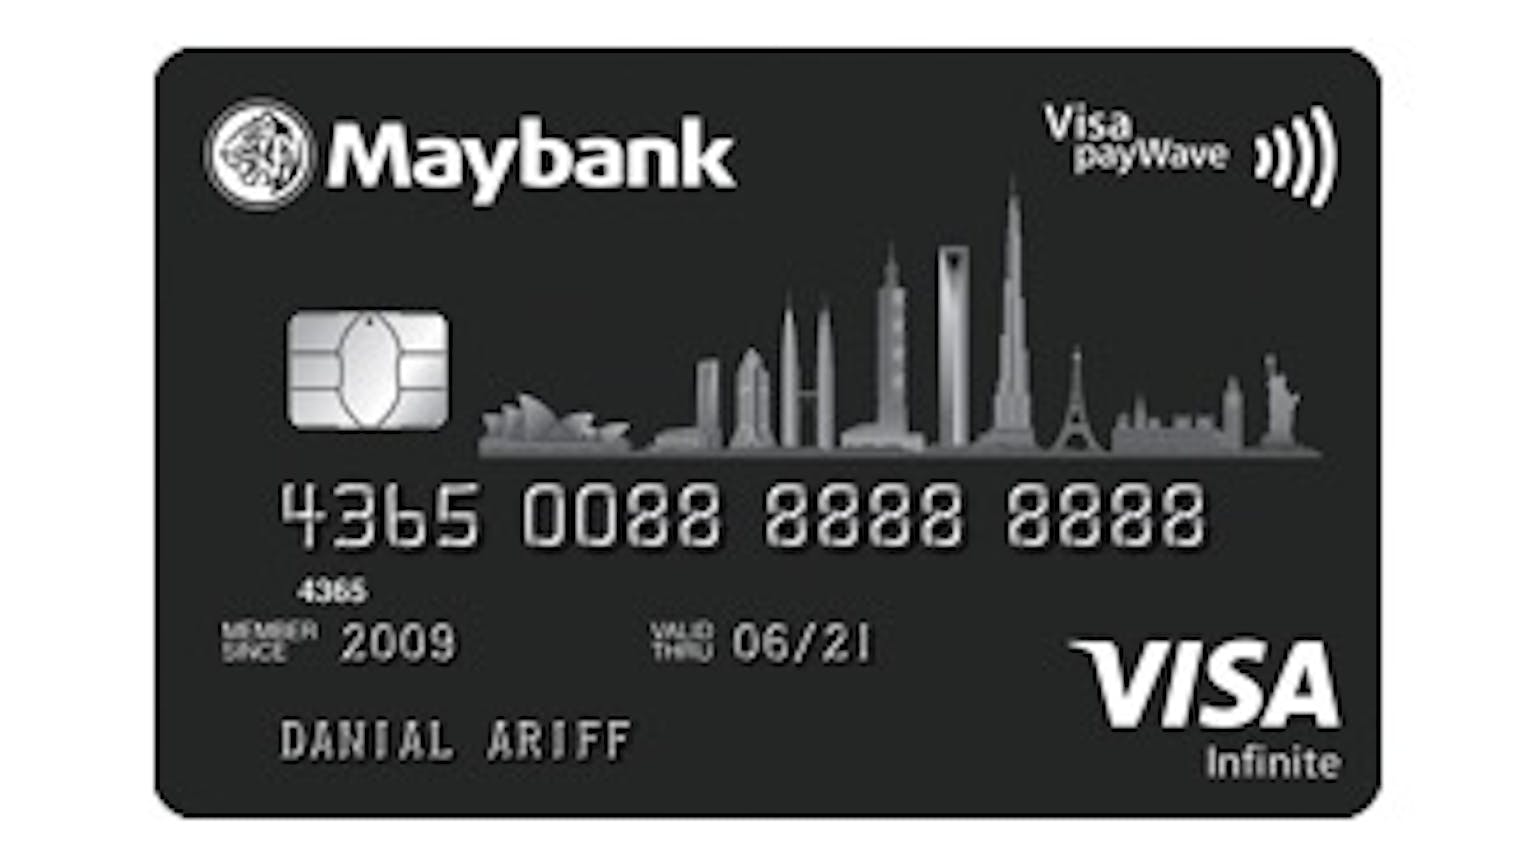 Maybank Visa Infinite Card